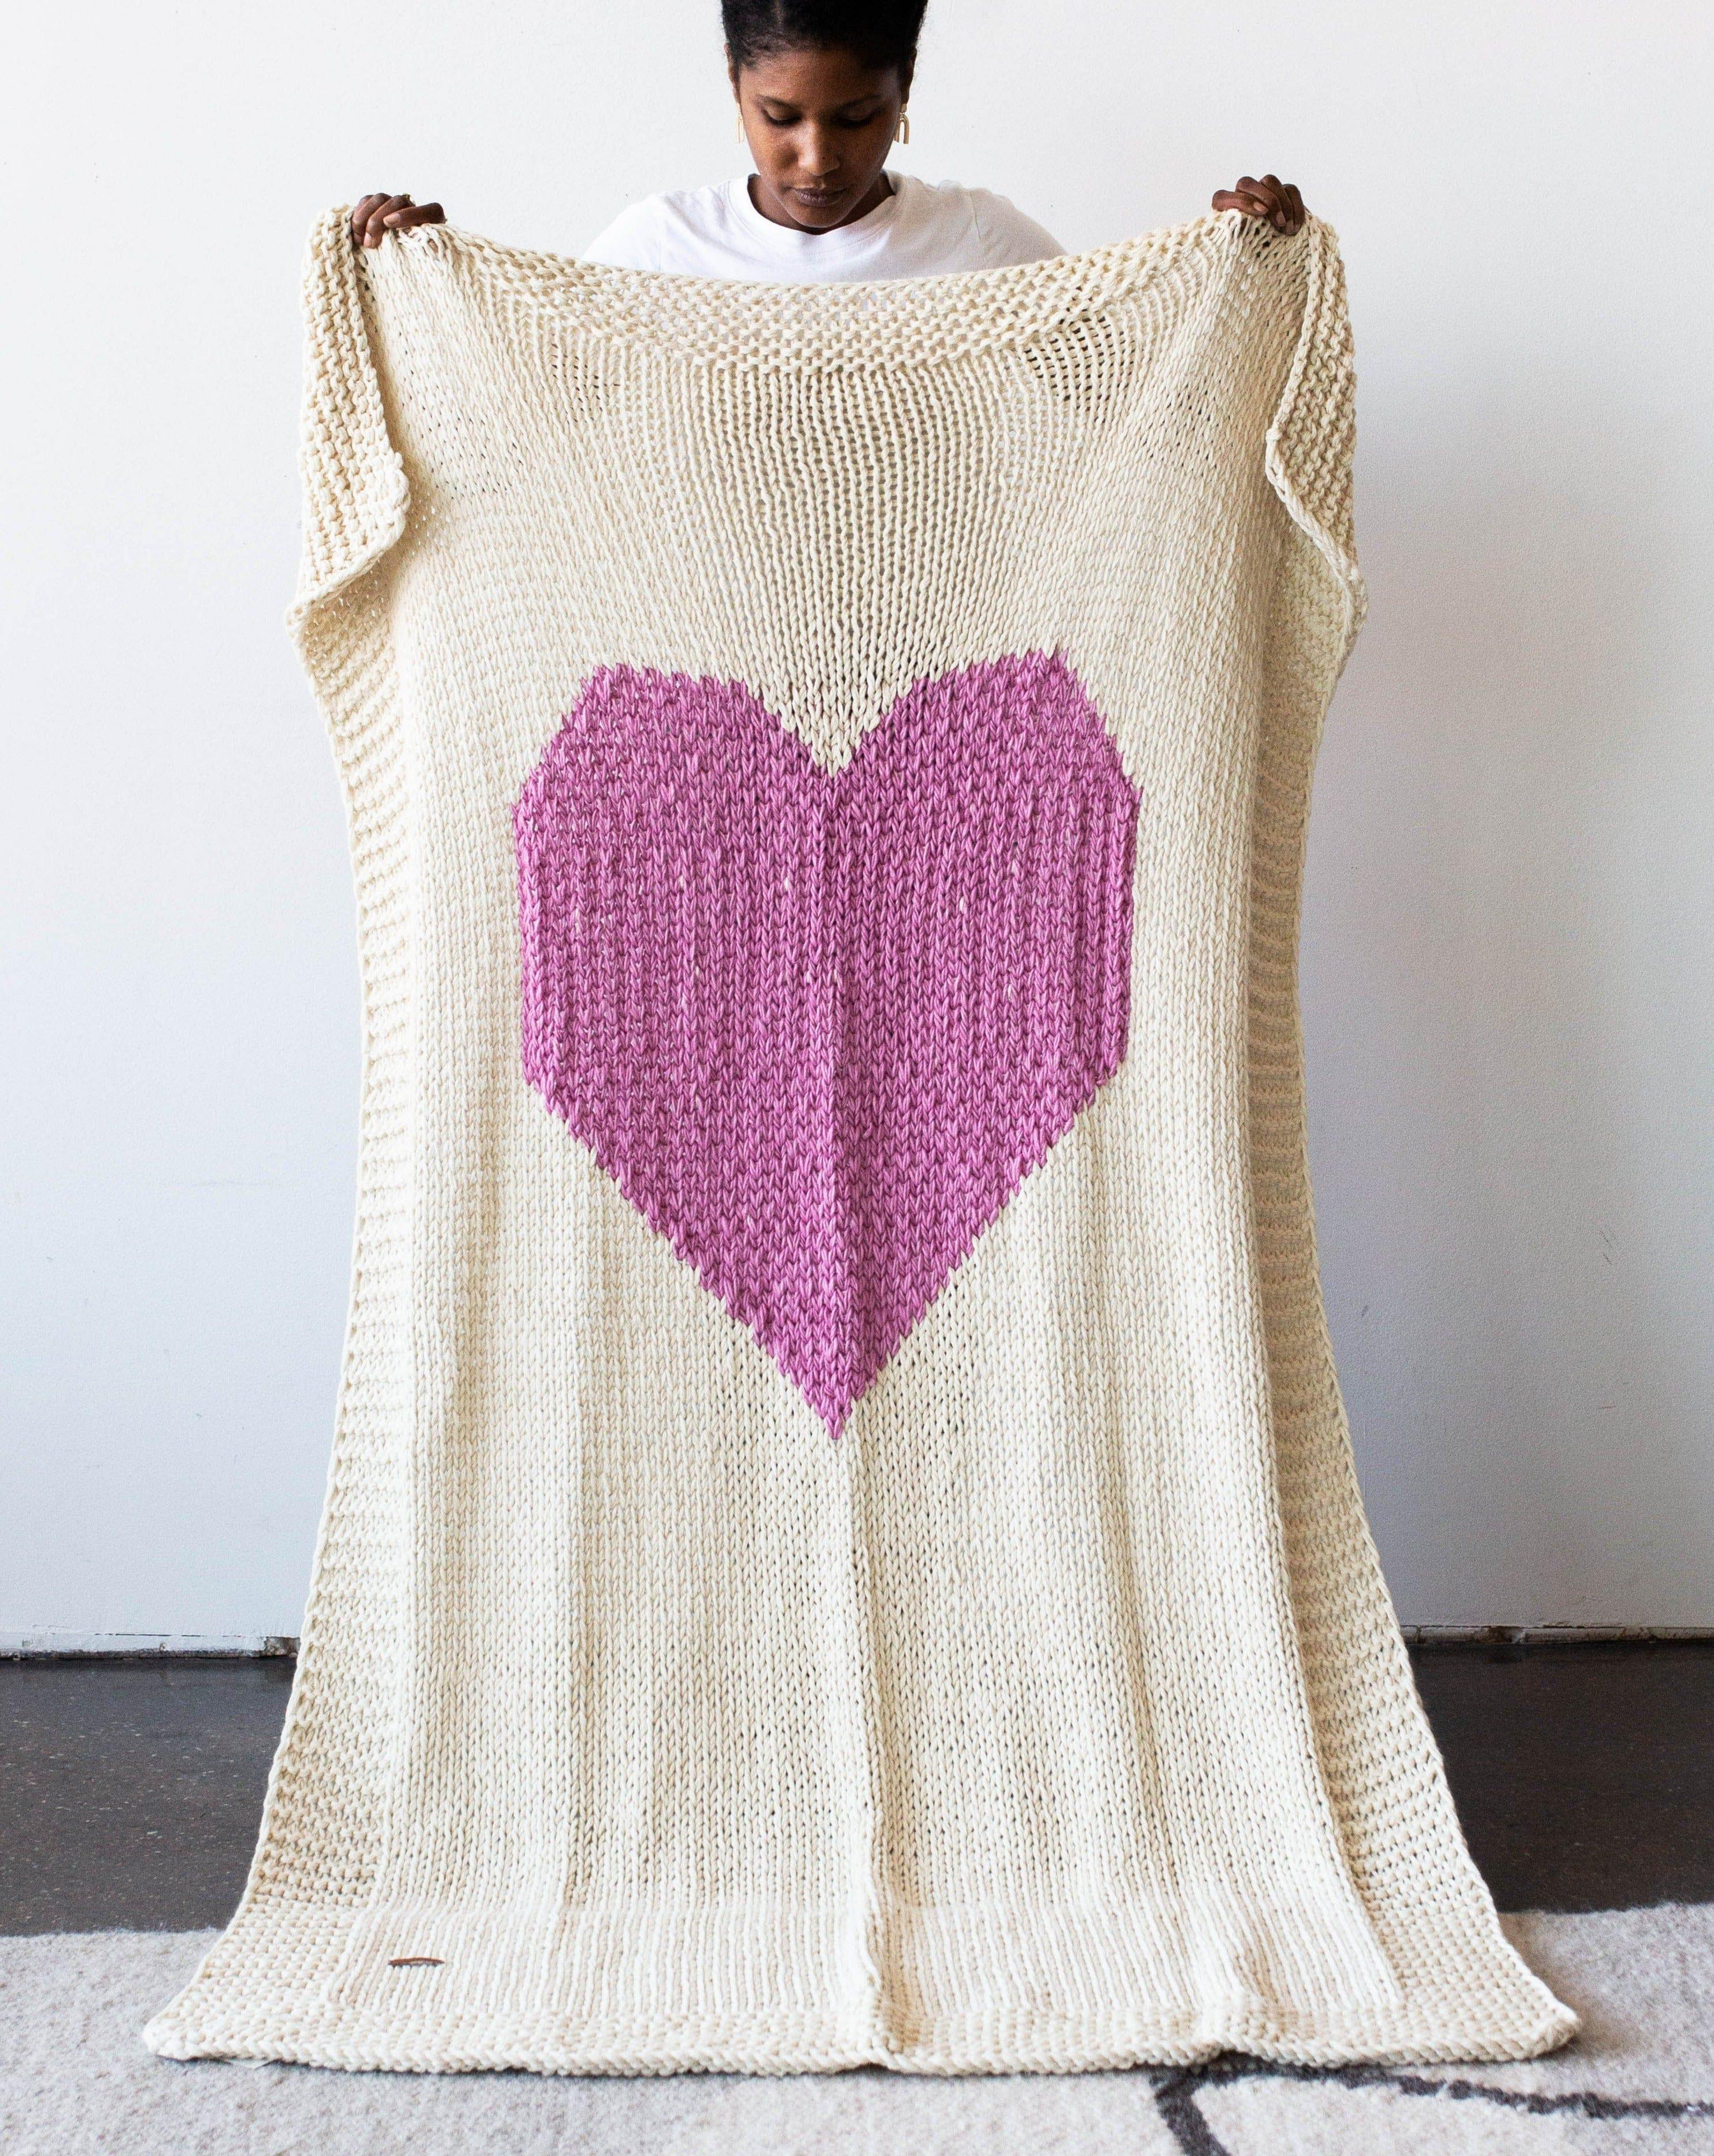 Kanju Interiors Hand Knitted Heart Blanket